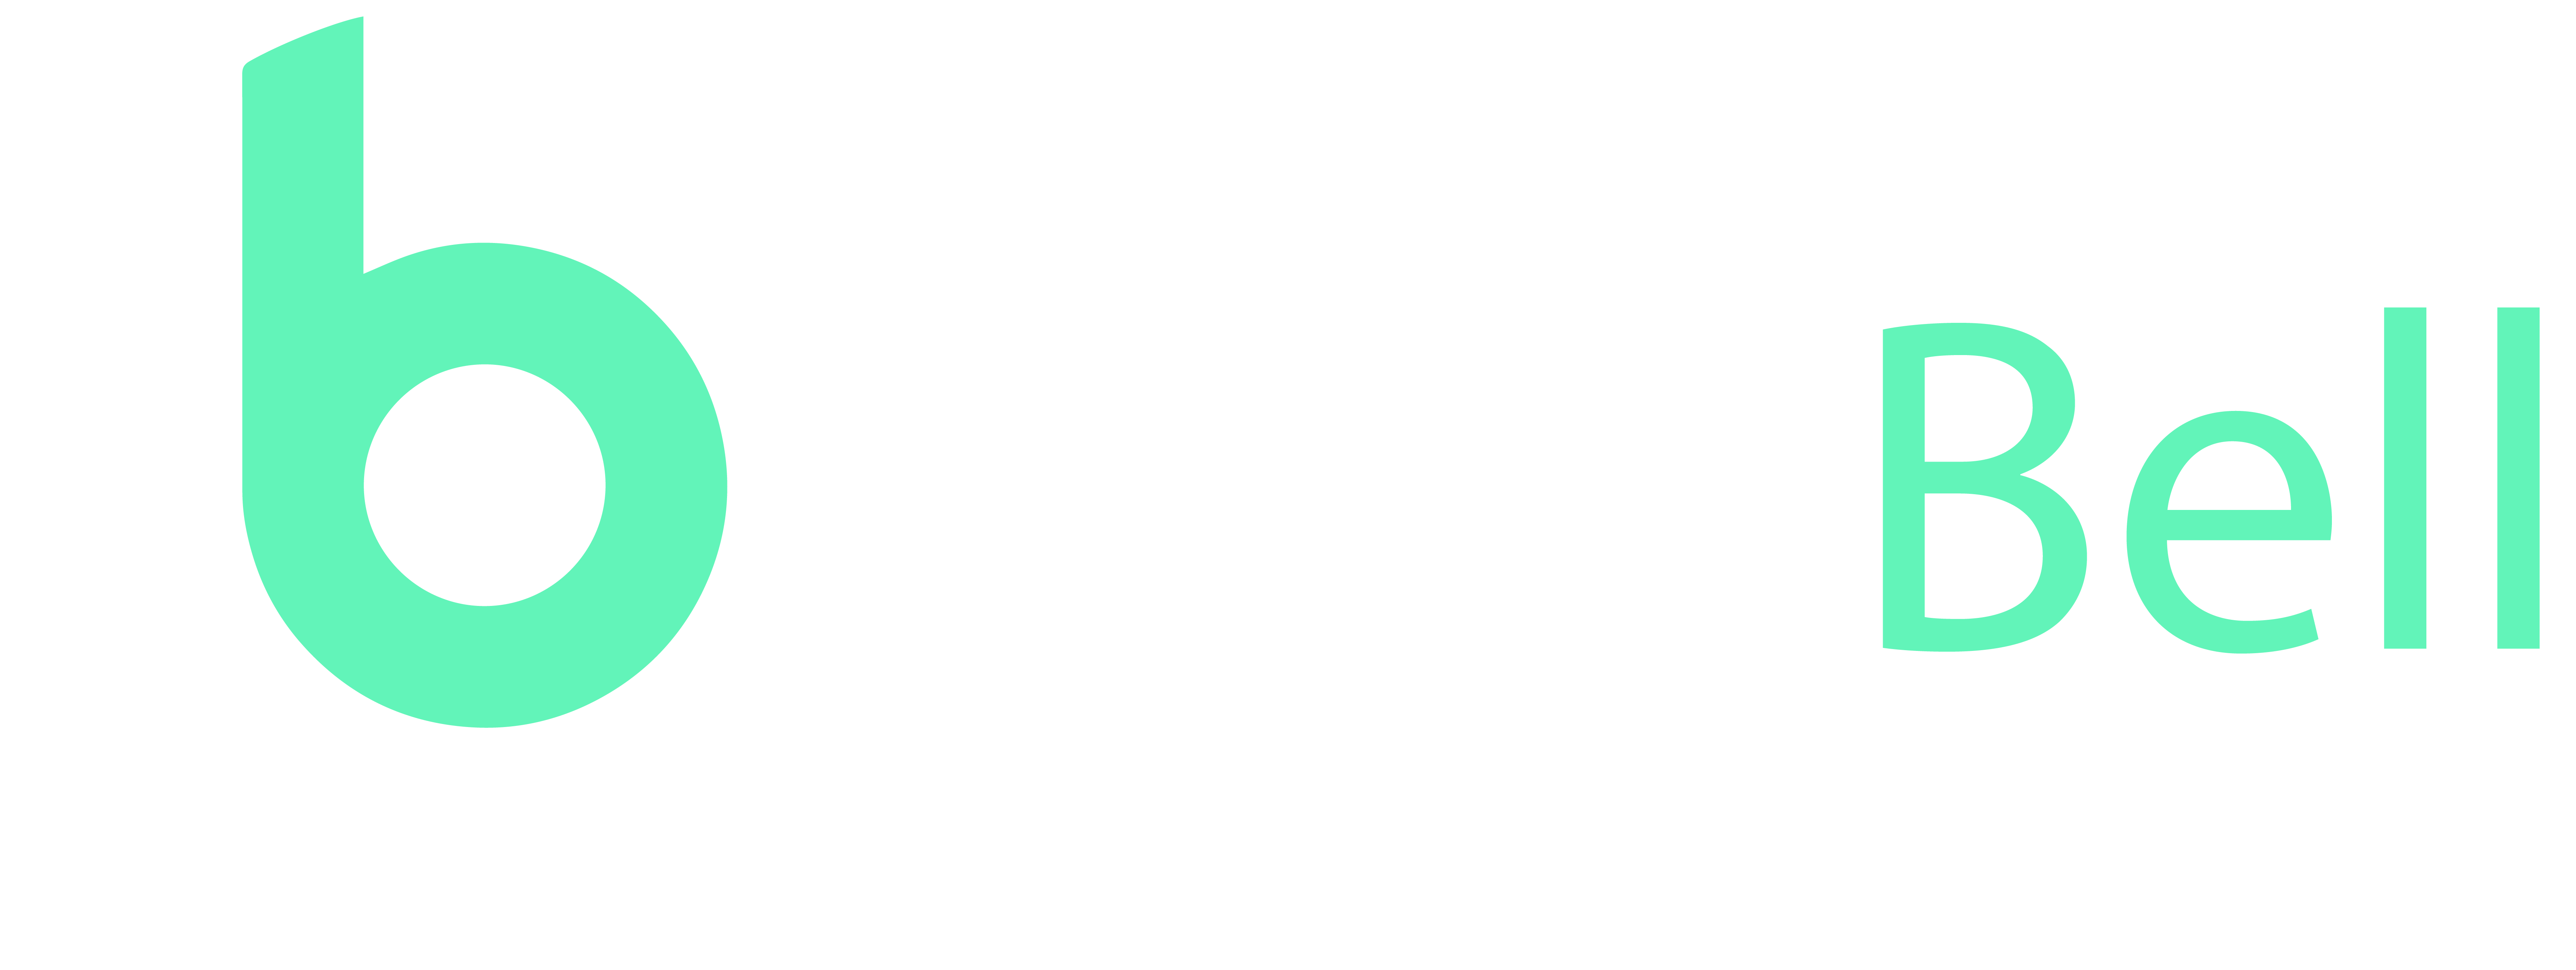 Crestbell